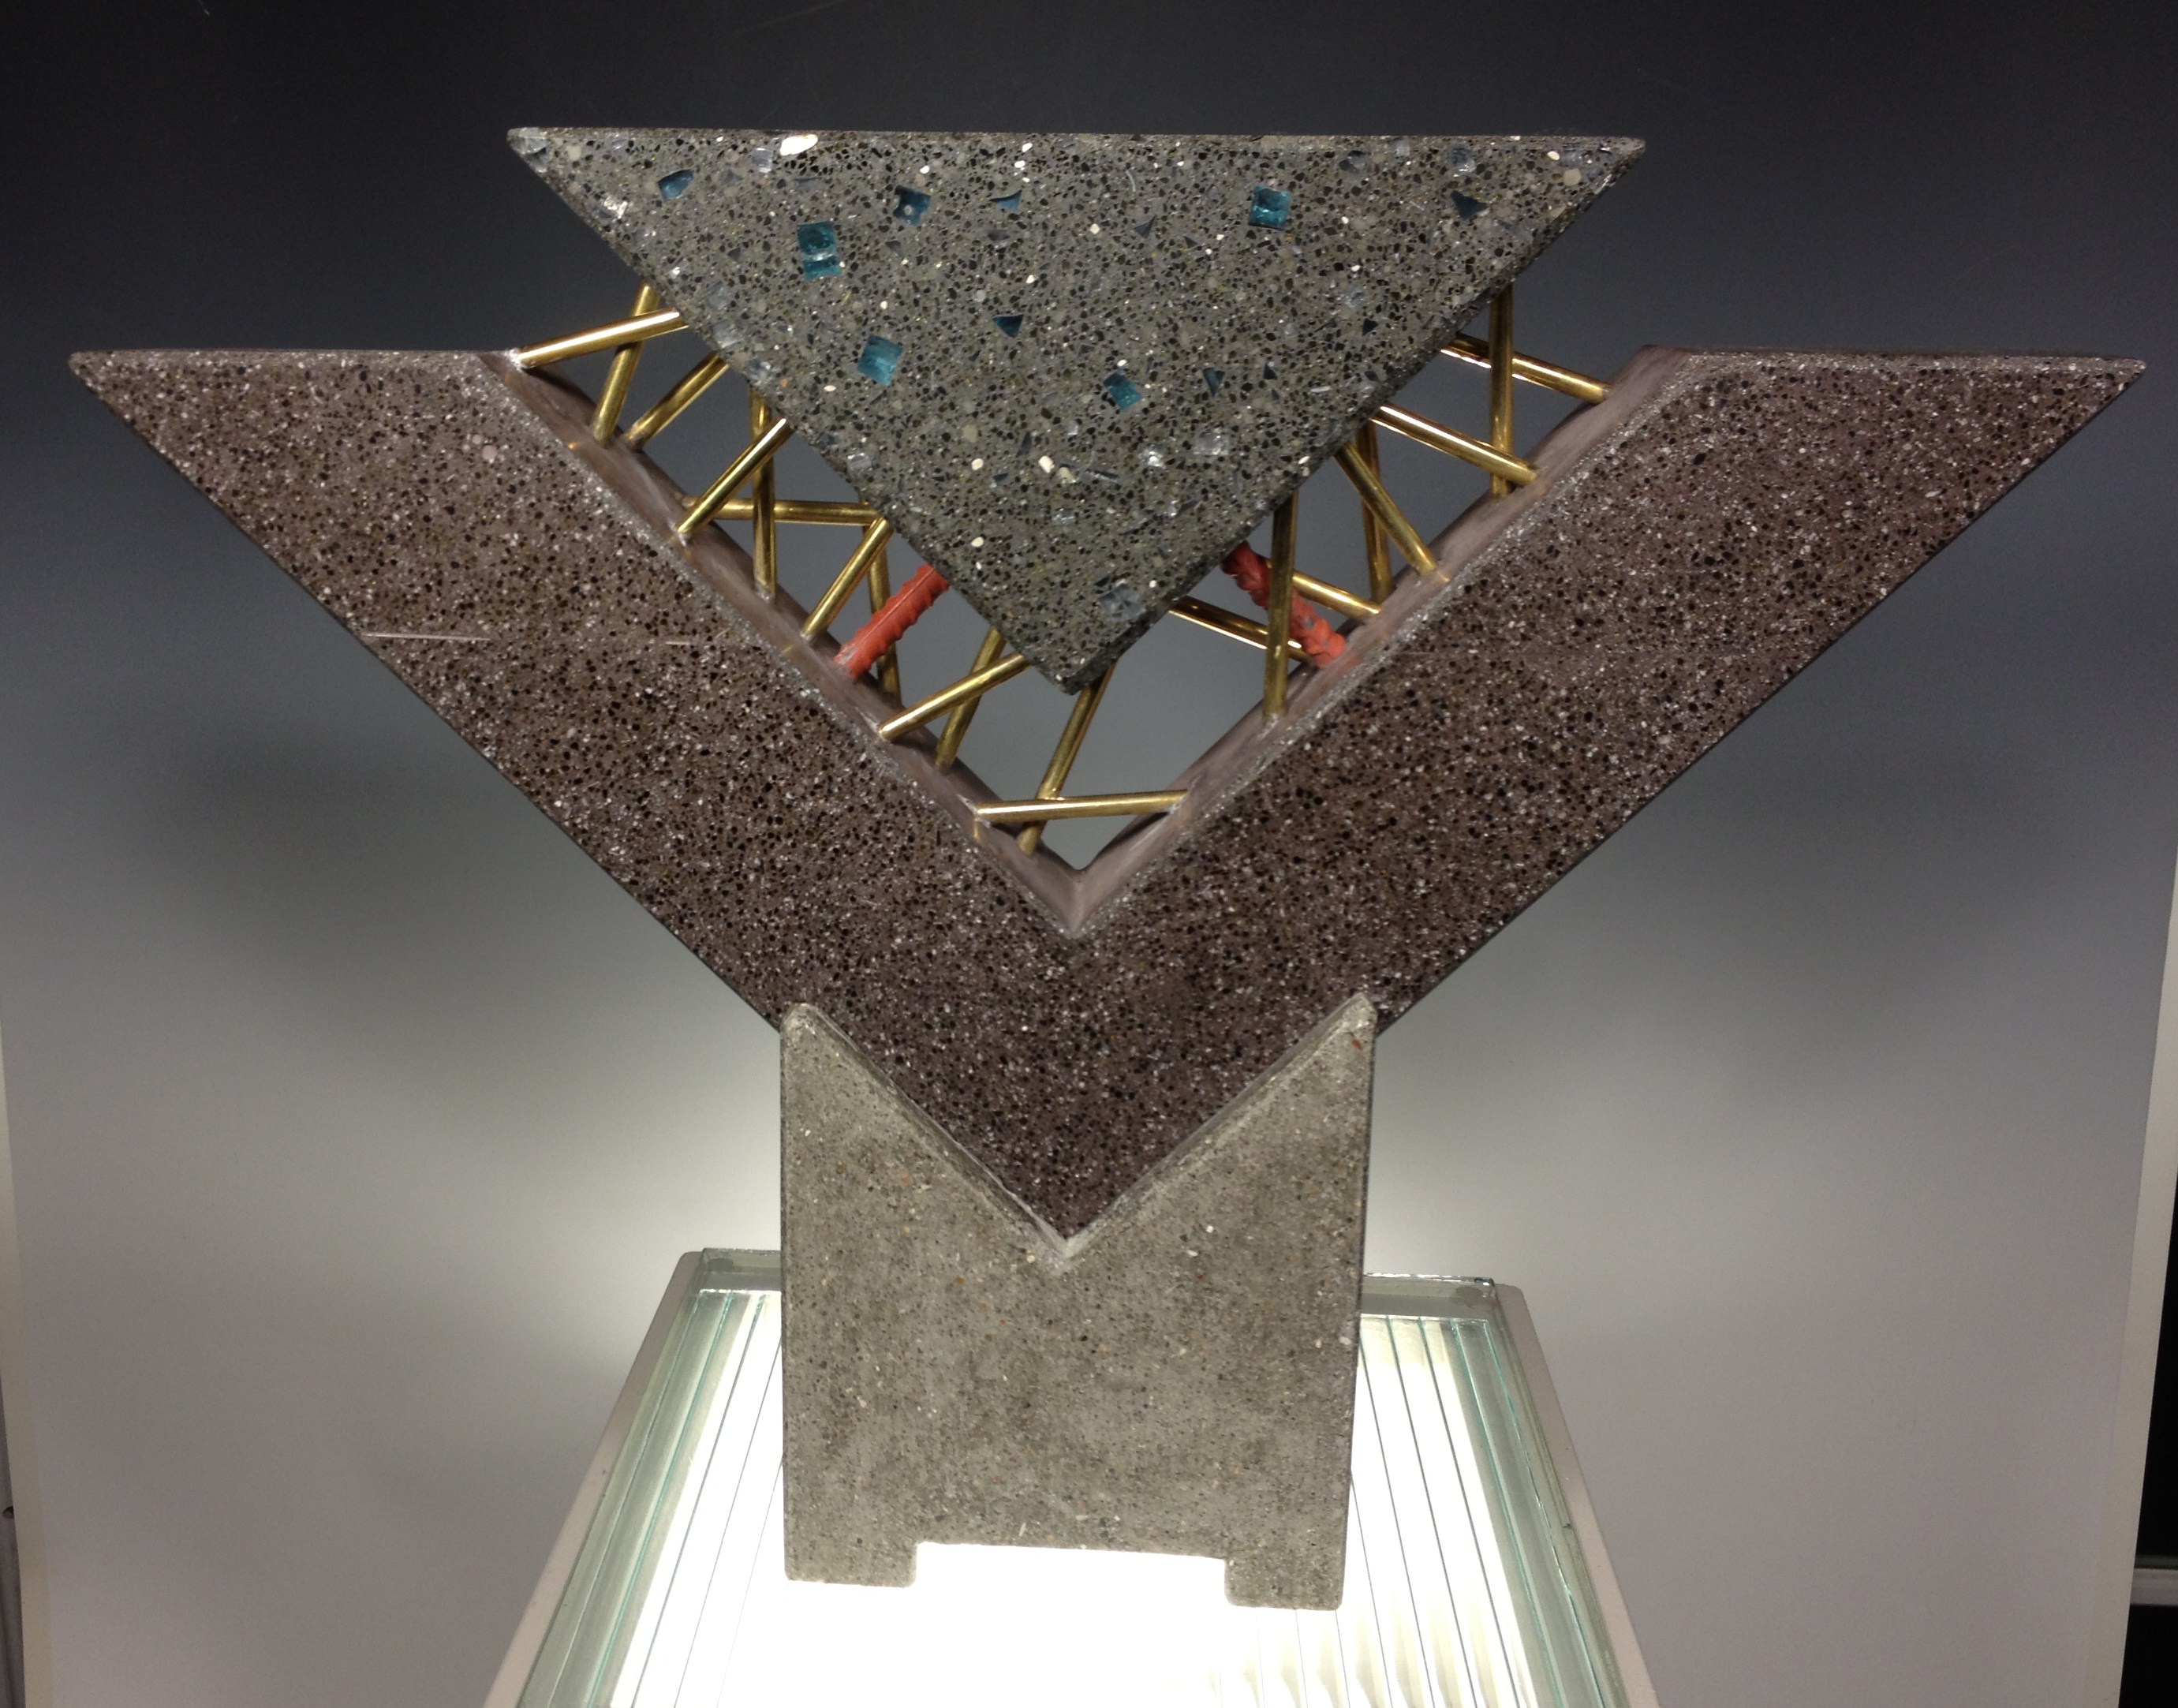 Michael Eddy Artist :: Concrete and Glass Sculptures : Michael Eddy Artist